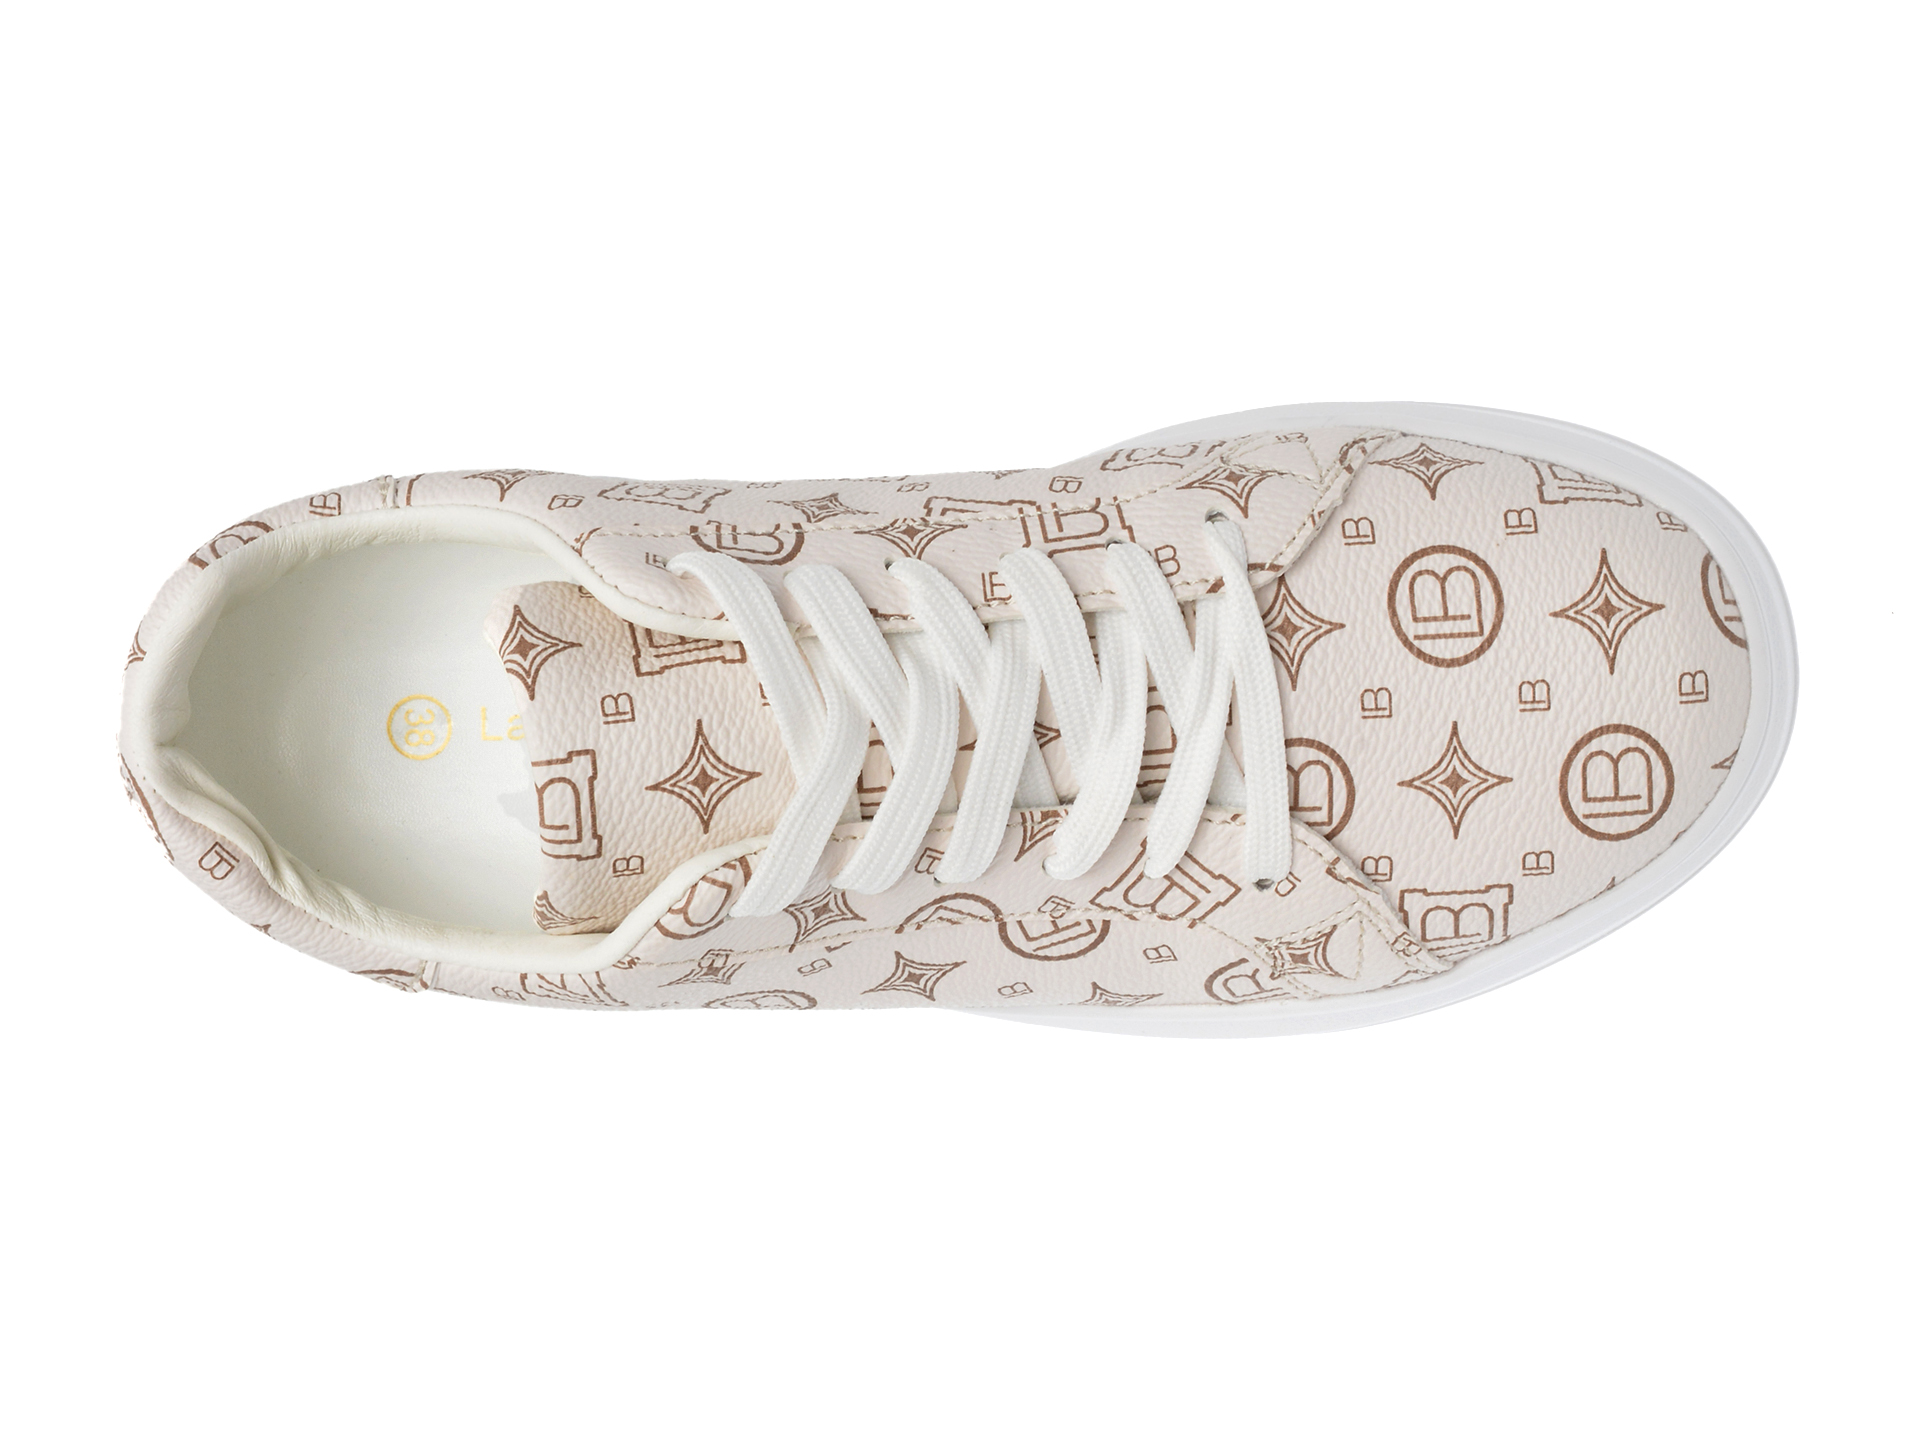 Poze Pantofi LAURA BIAGIOTTI albi, 8006, din piele ecologica otter.ro